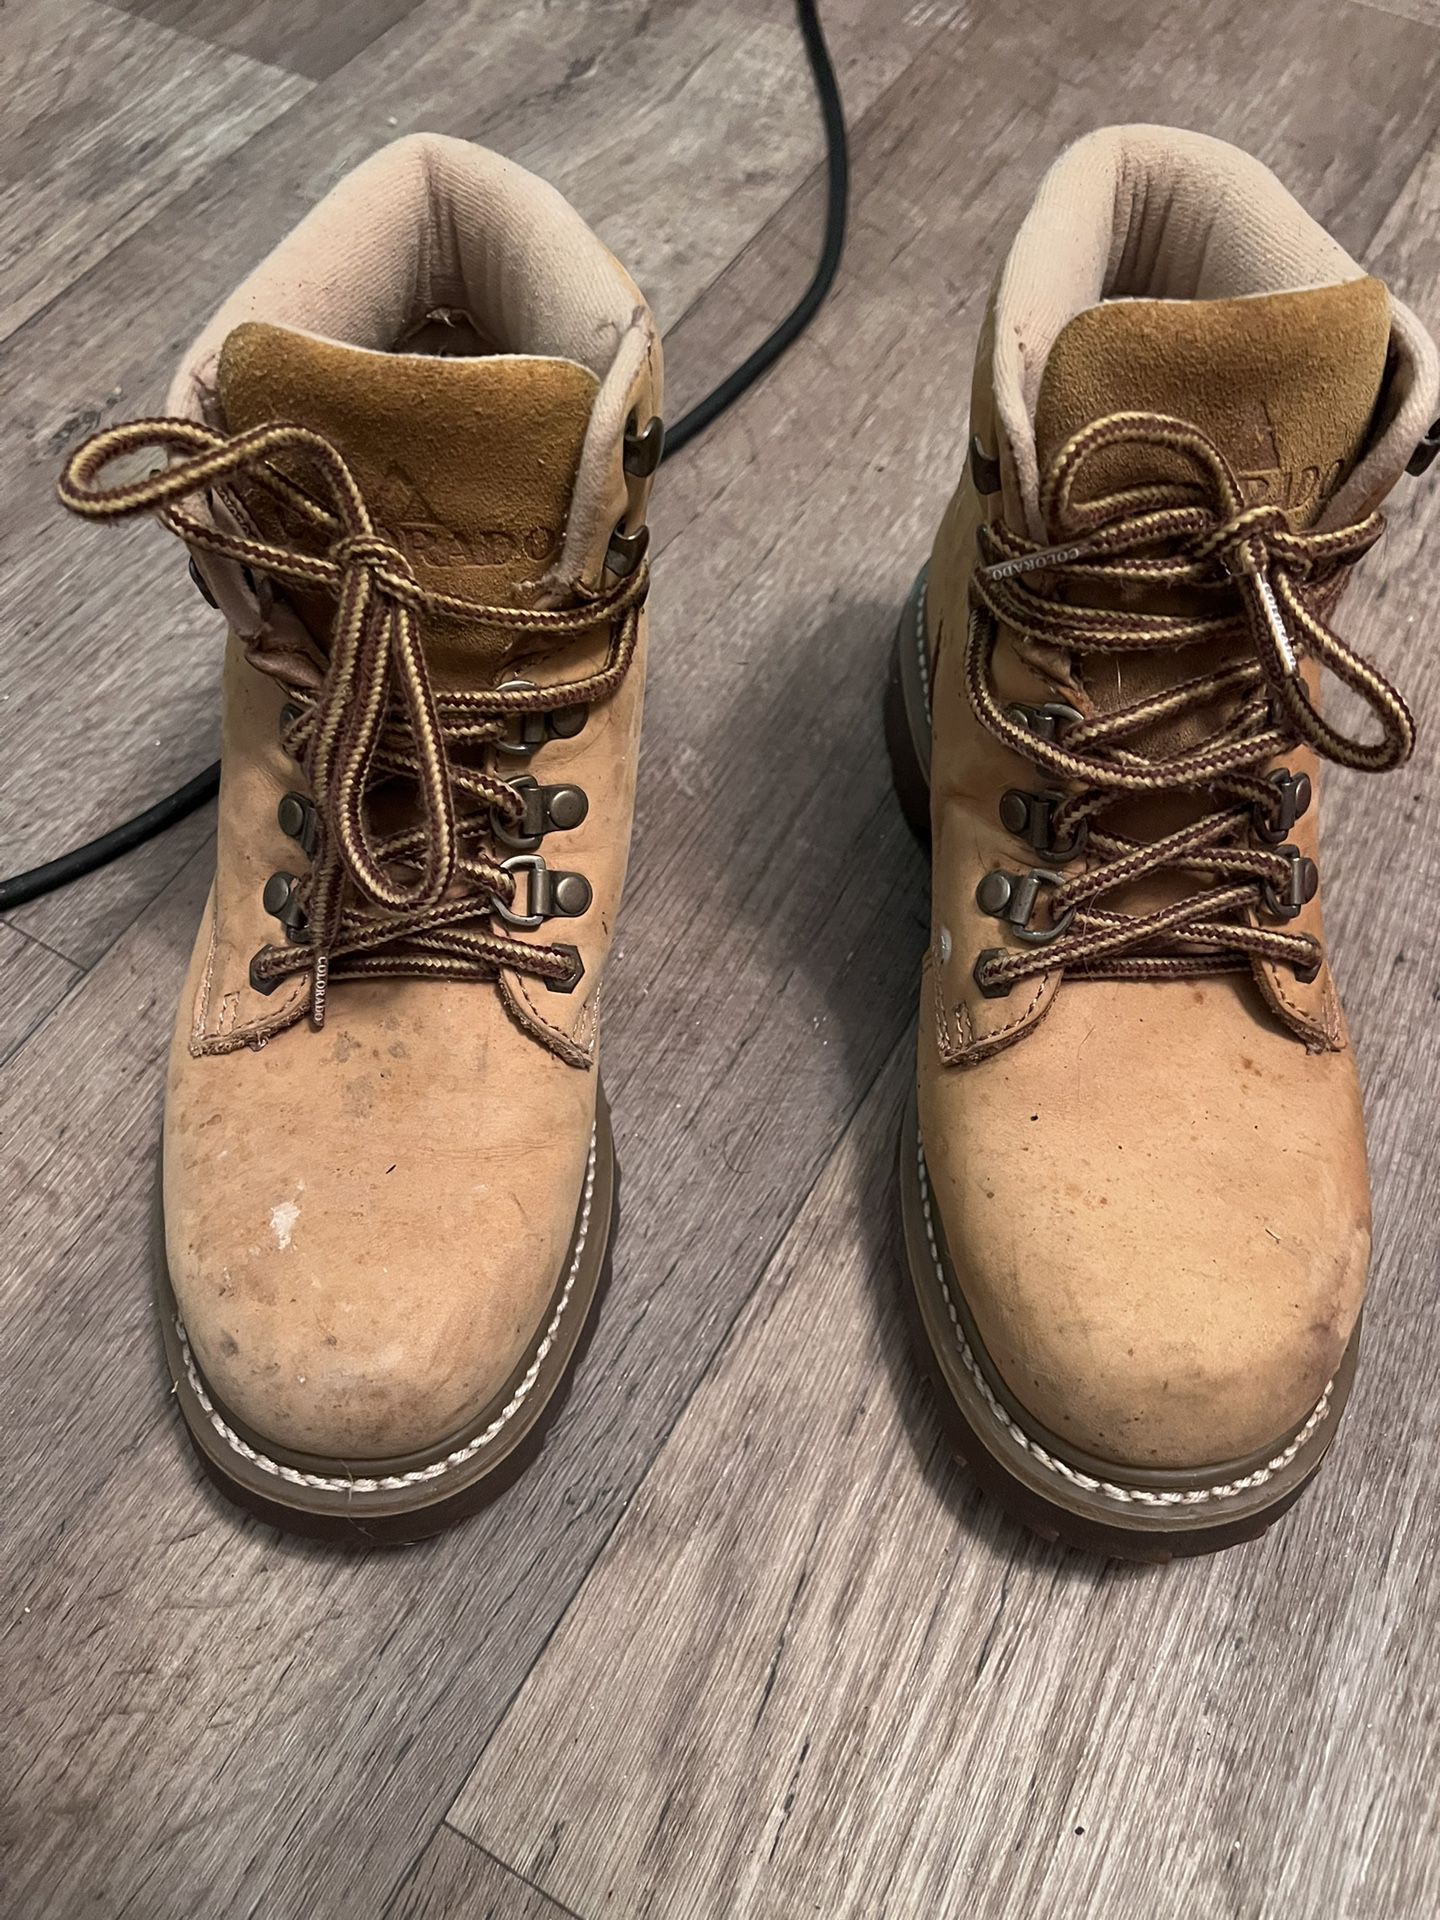 Men’s Colorado Work Boots Size 9.5